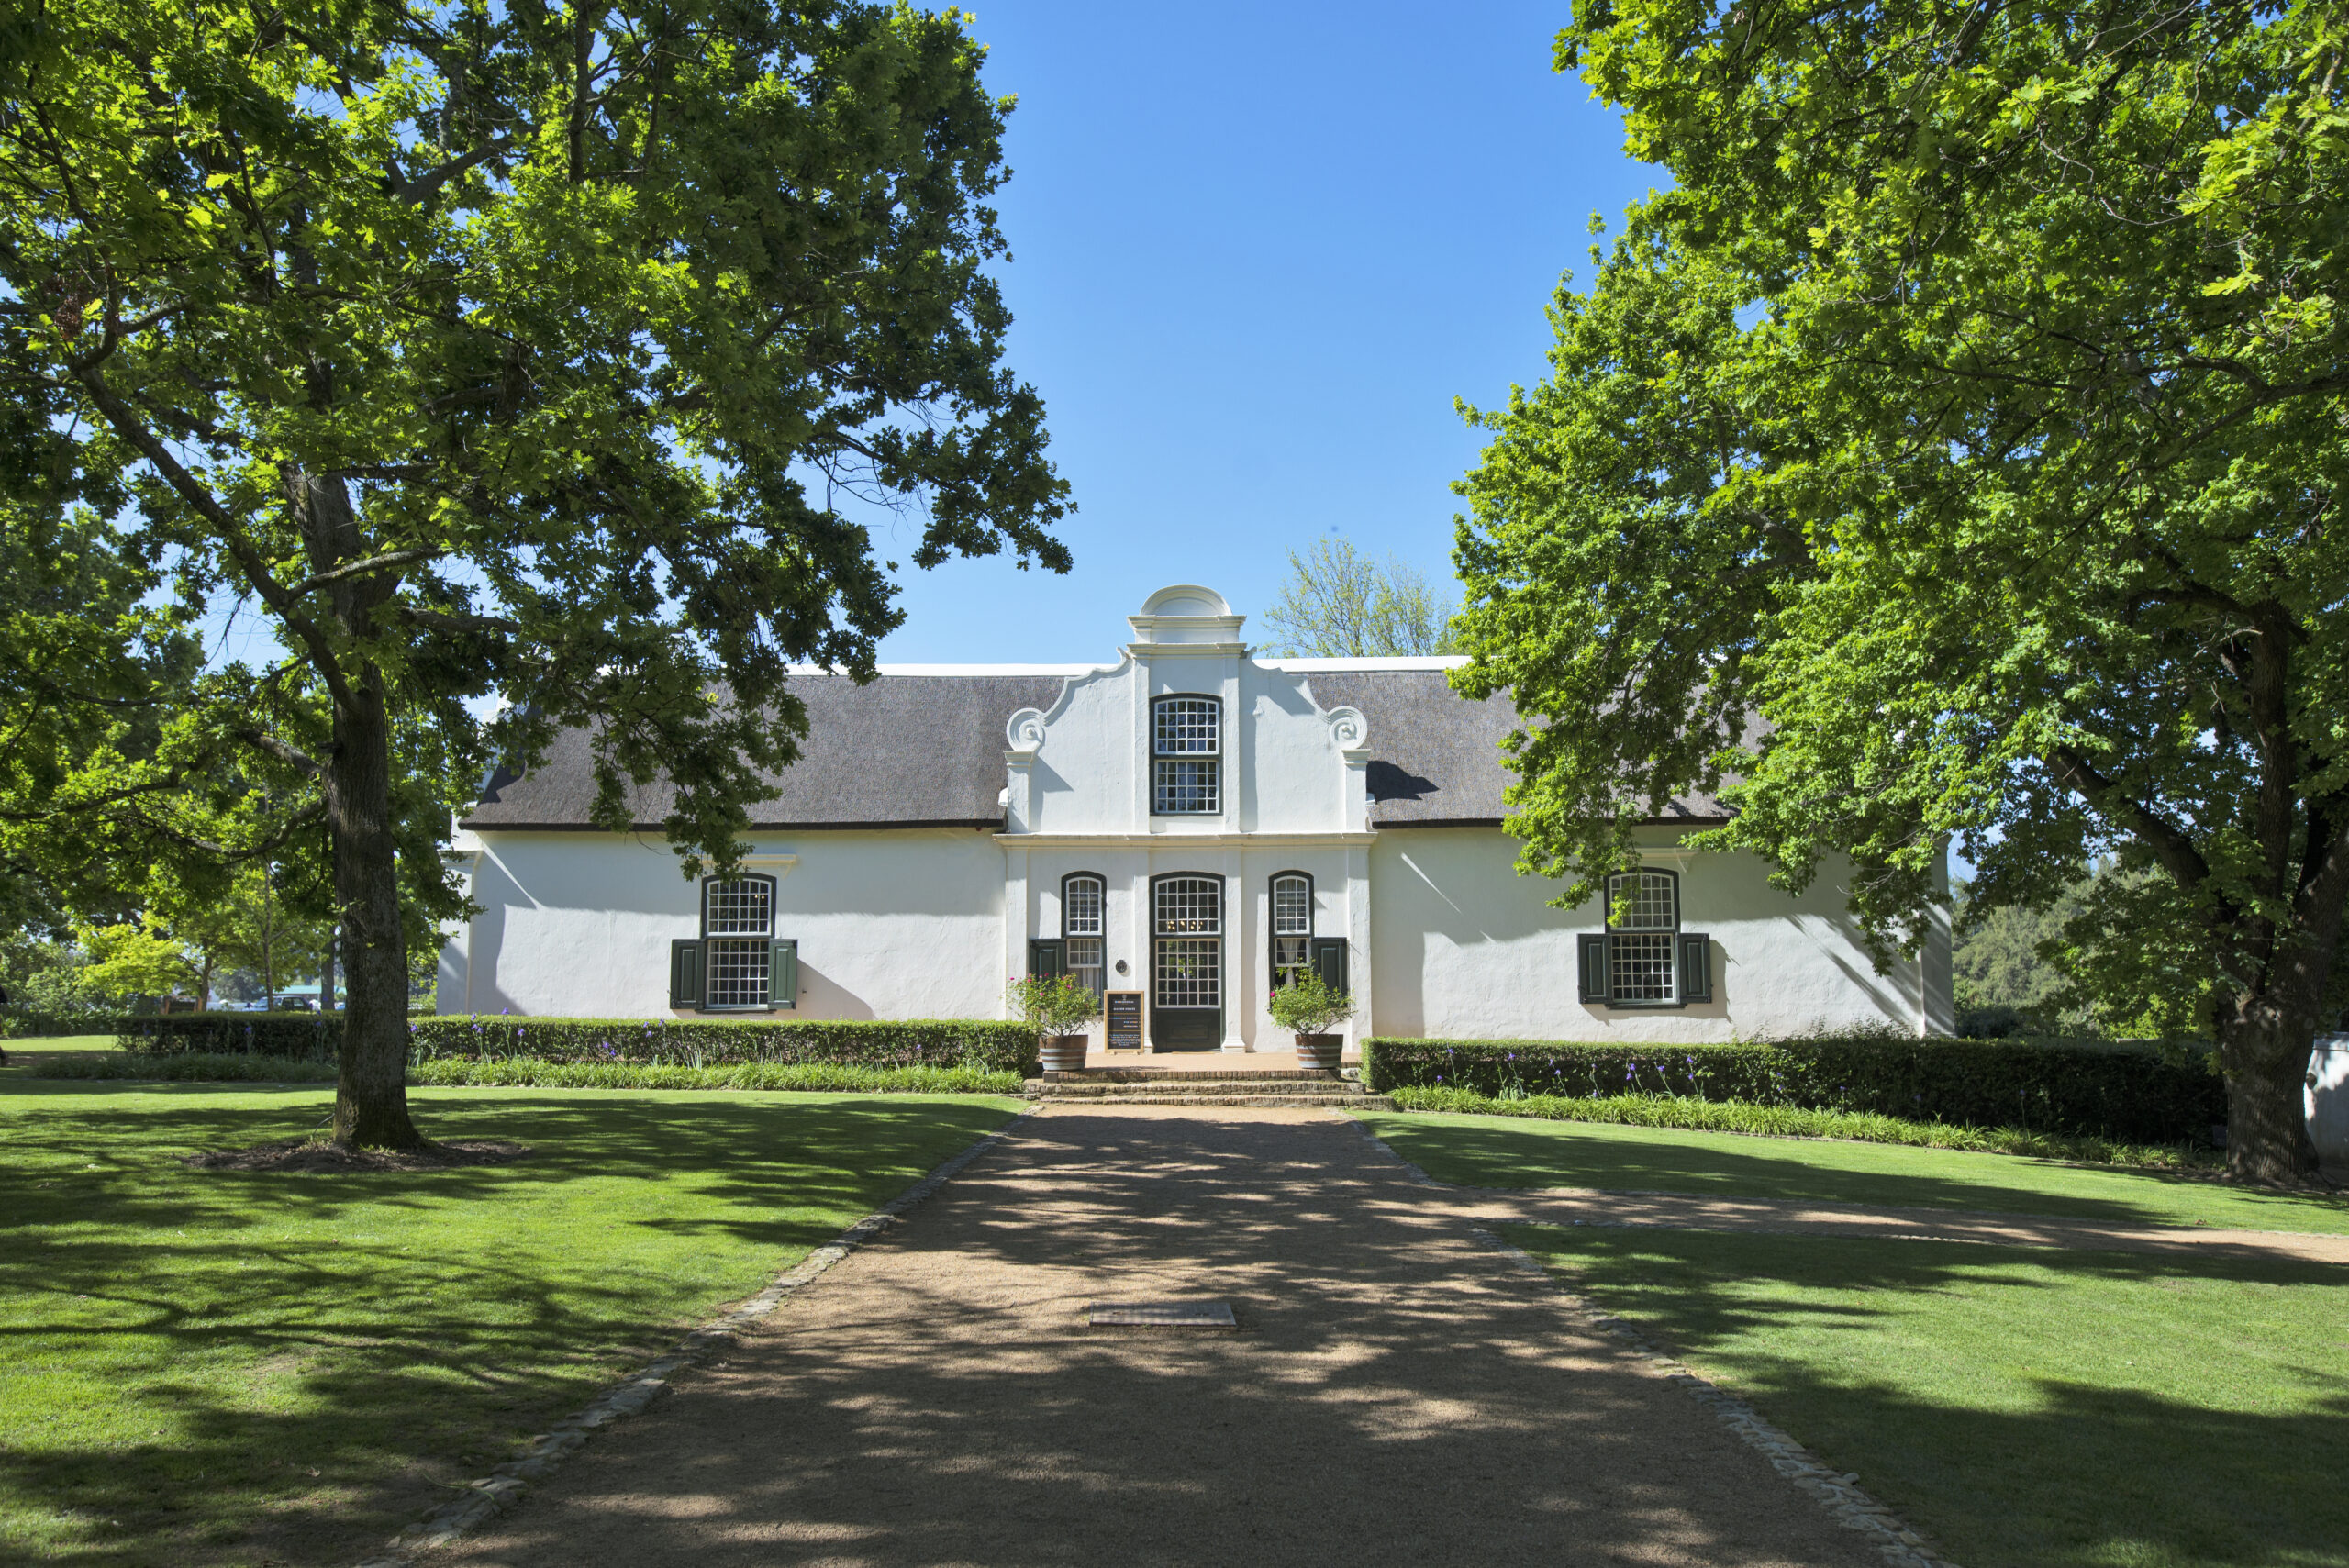 Boschendal Wine Estate – South Africa